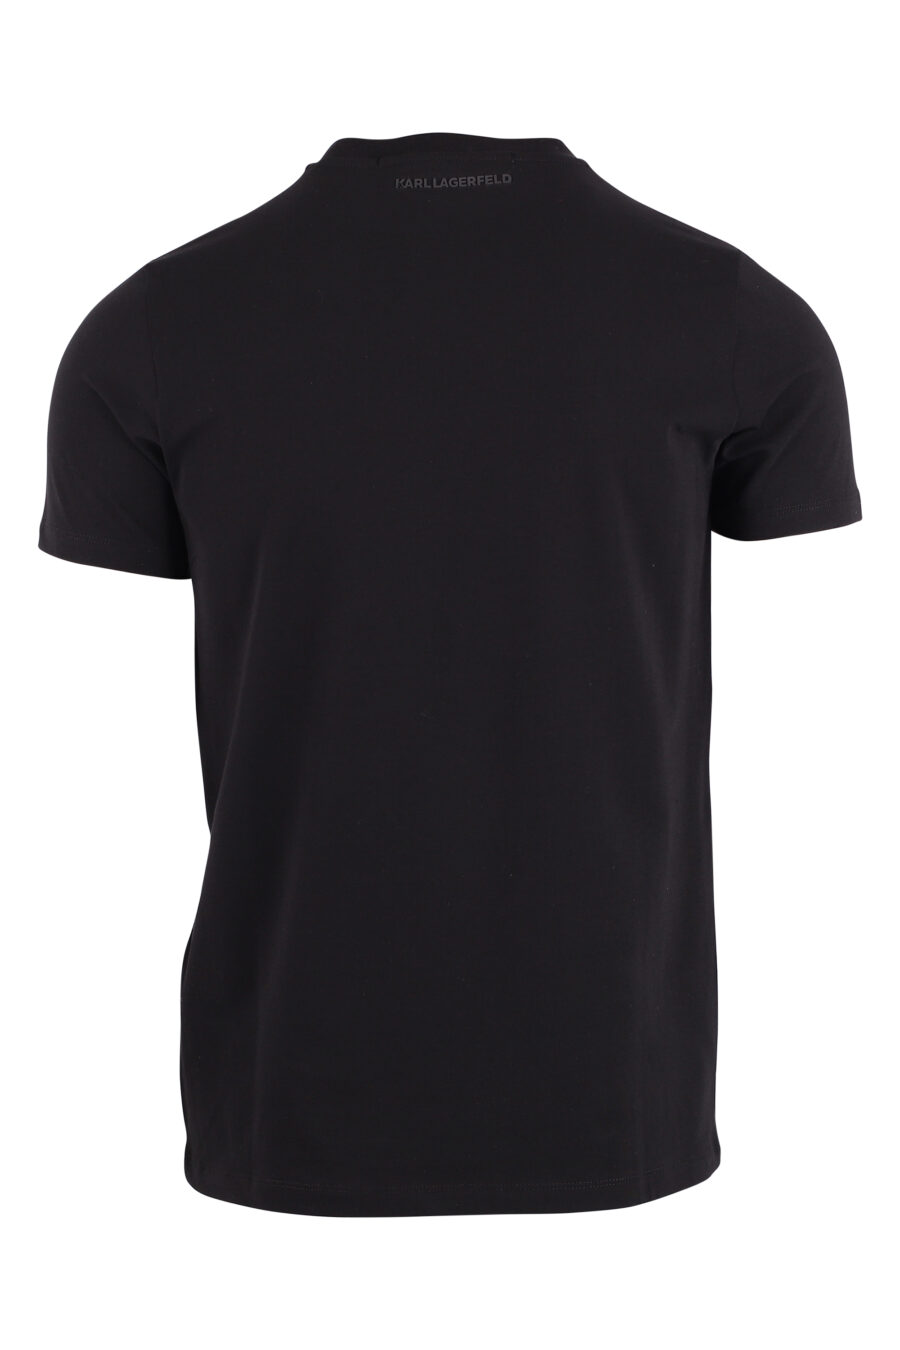 Camiseta negra con logo efecto holograma - IMG 9411